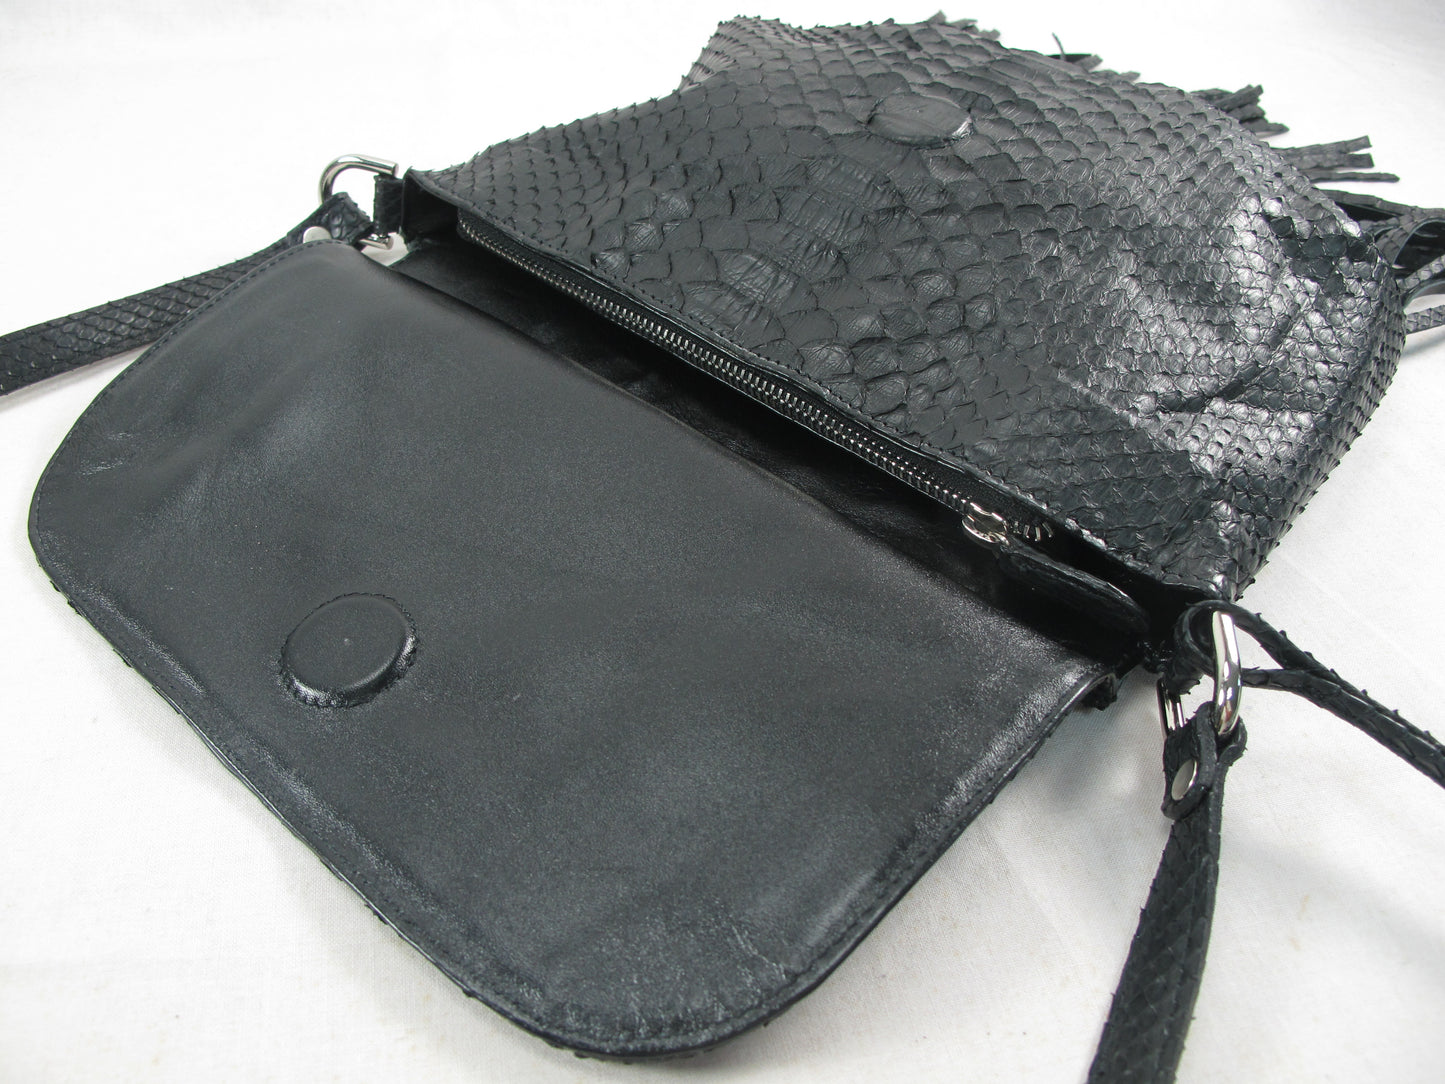 PELGIO Genuine Python Skin Leather Crossbody Bohemian Bag Purse